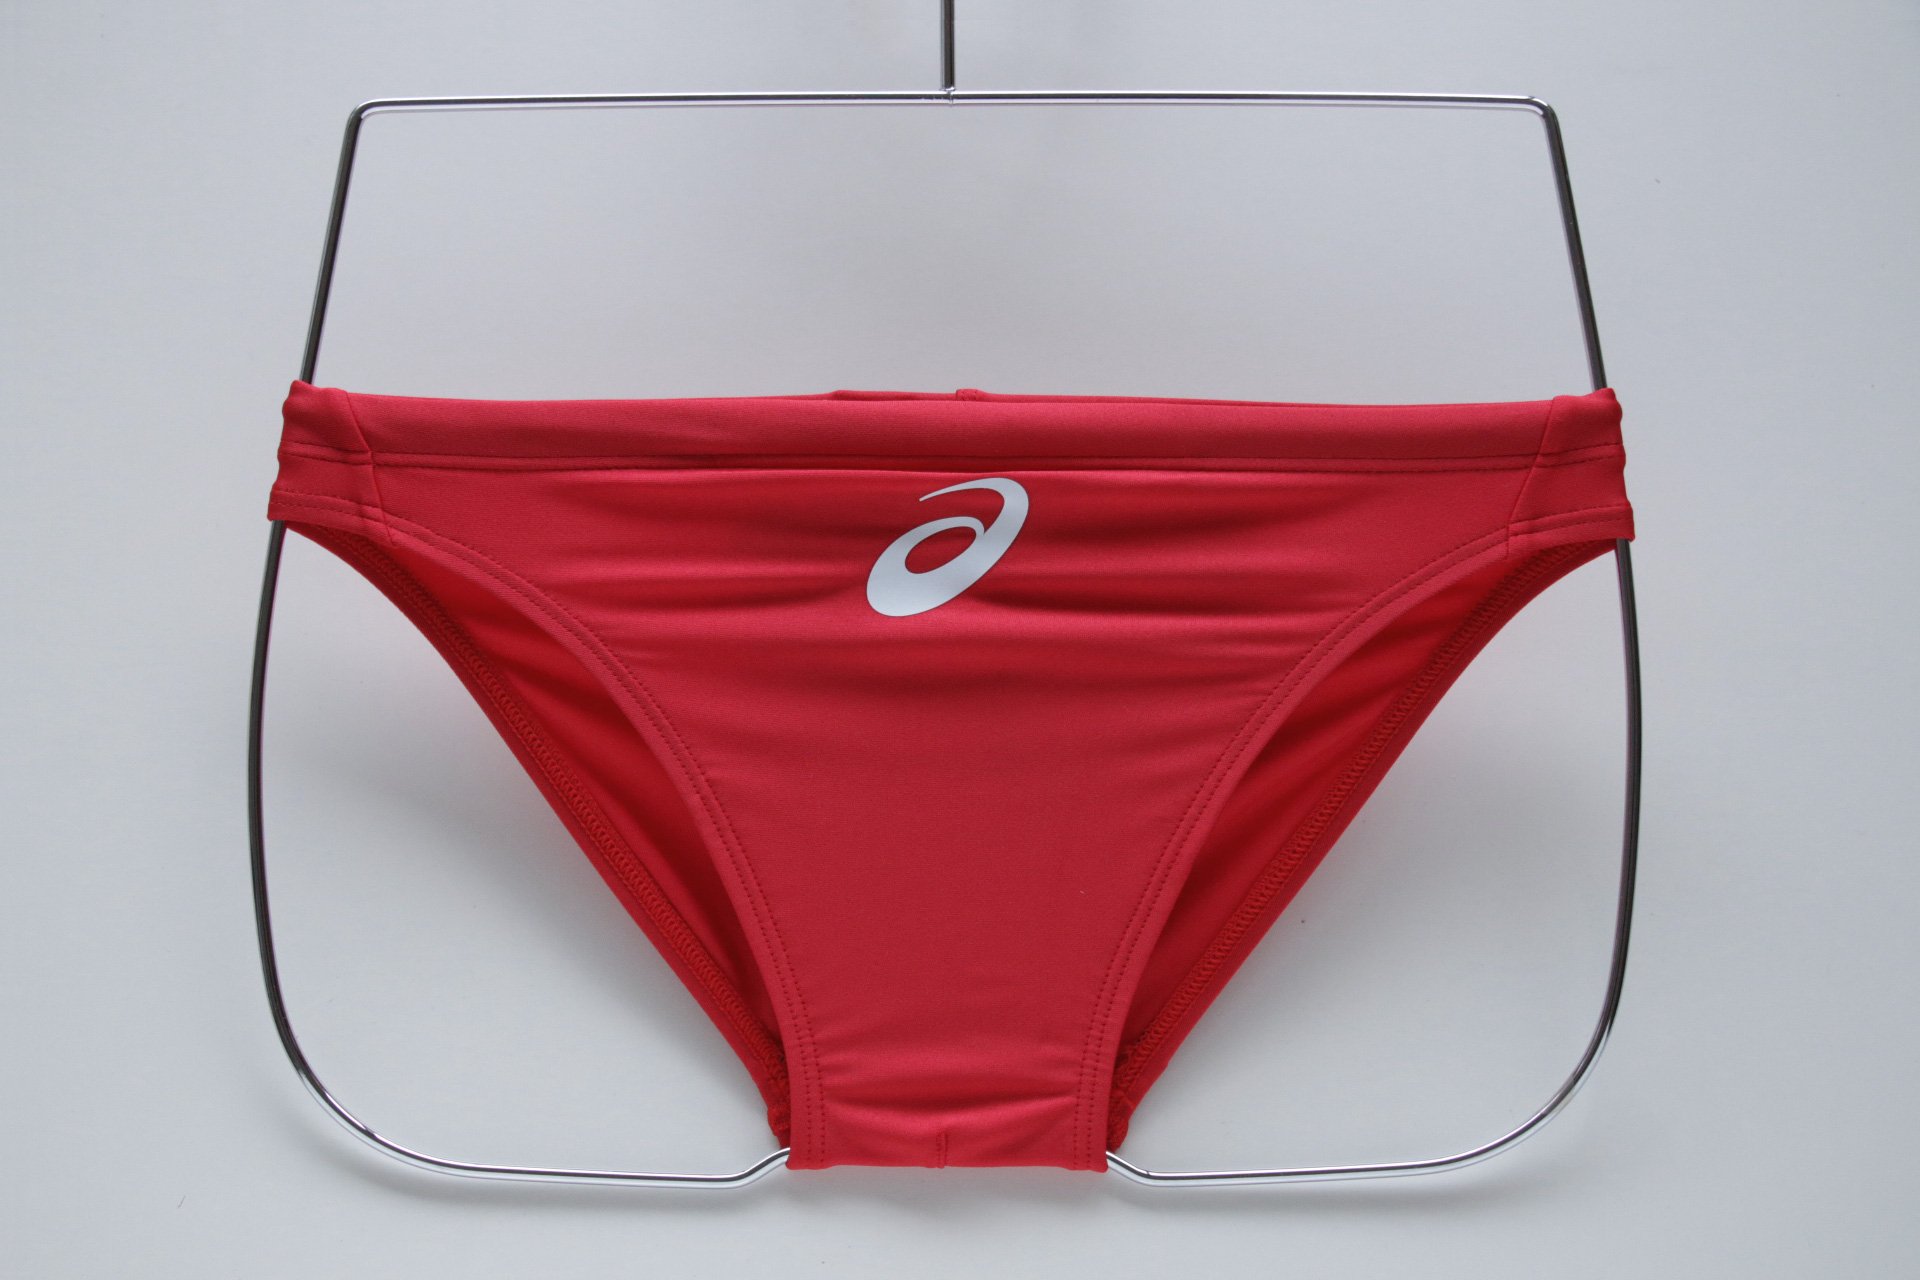 asics Men's Competition Swimwear Successor to HYDRO-CD Brief Red